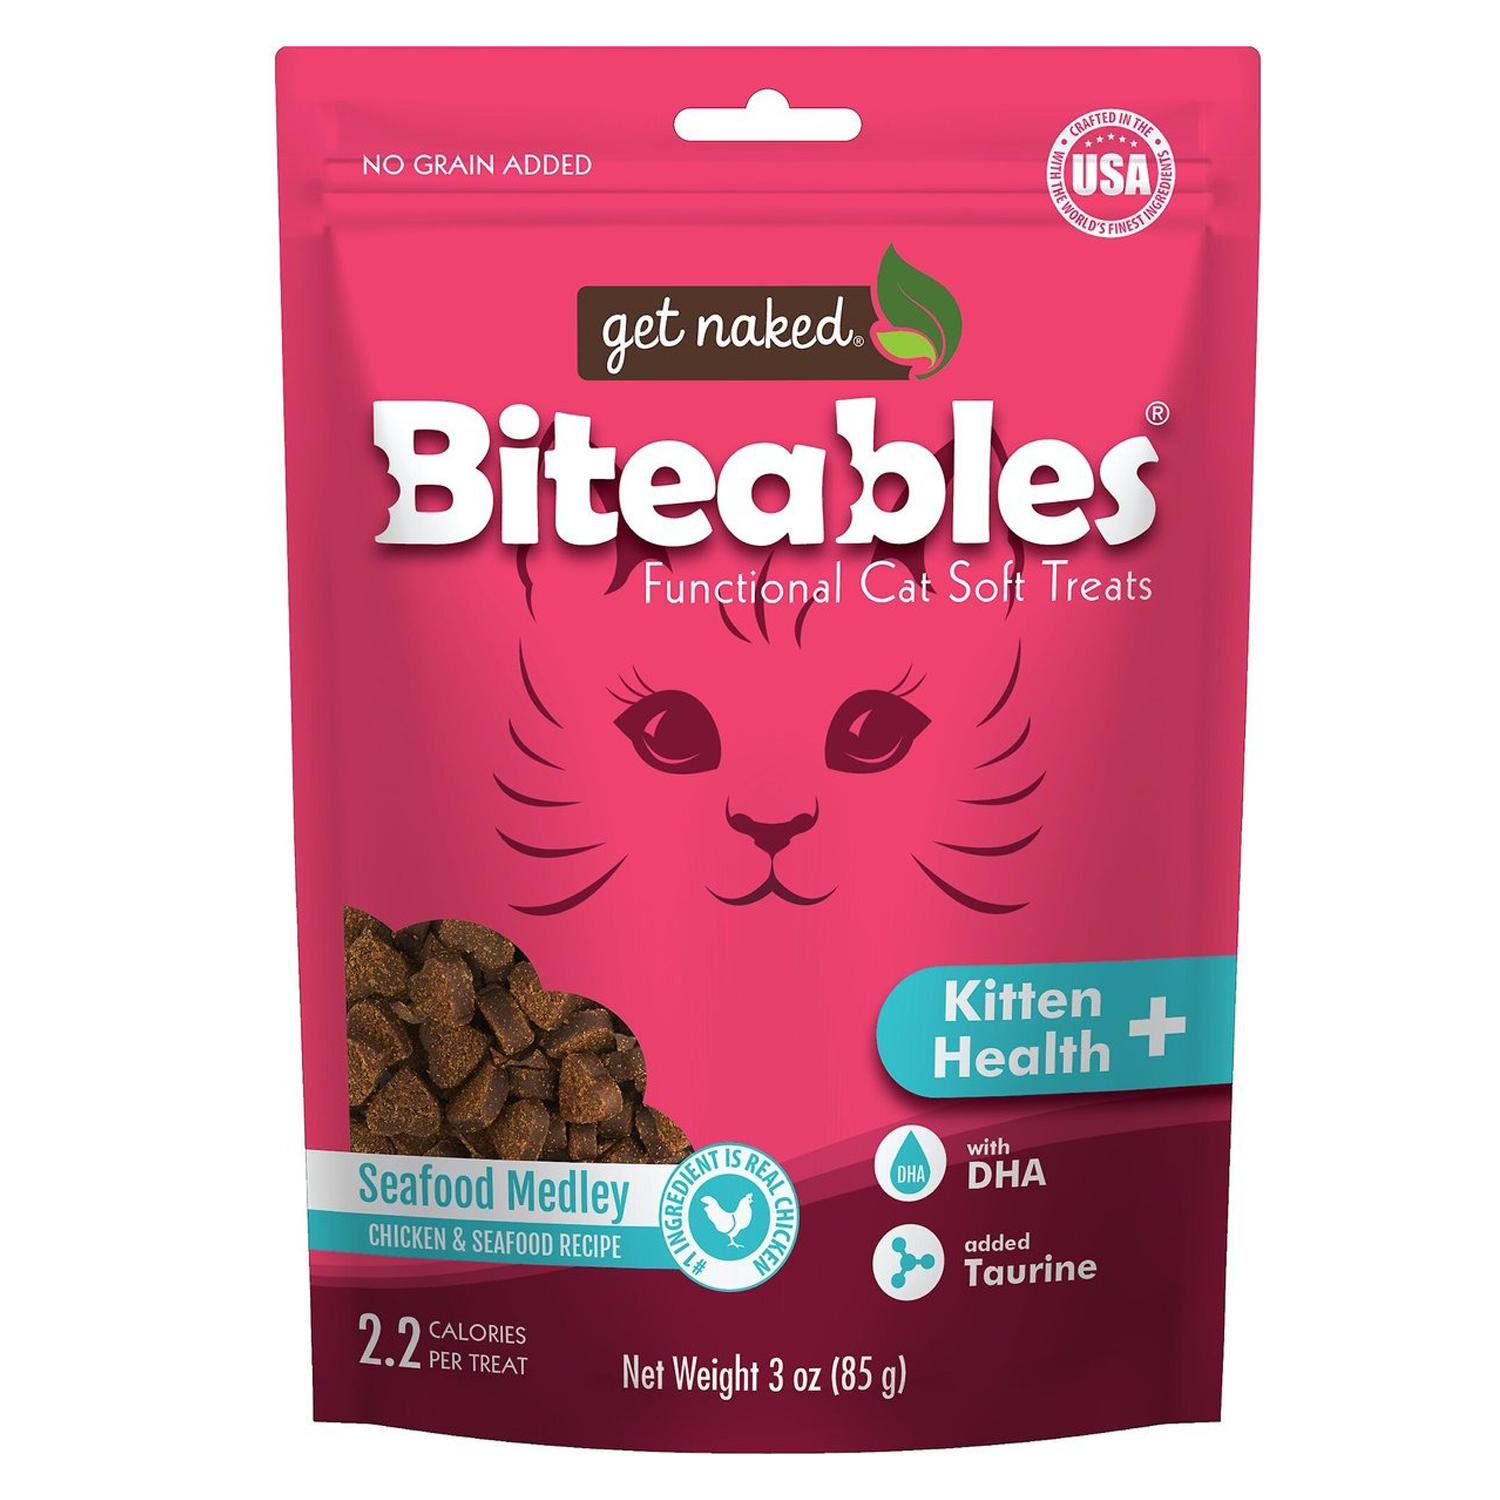 Get Naked Biteables Kitten Health Plus Soft Cat Treats